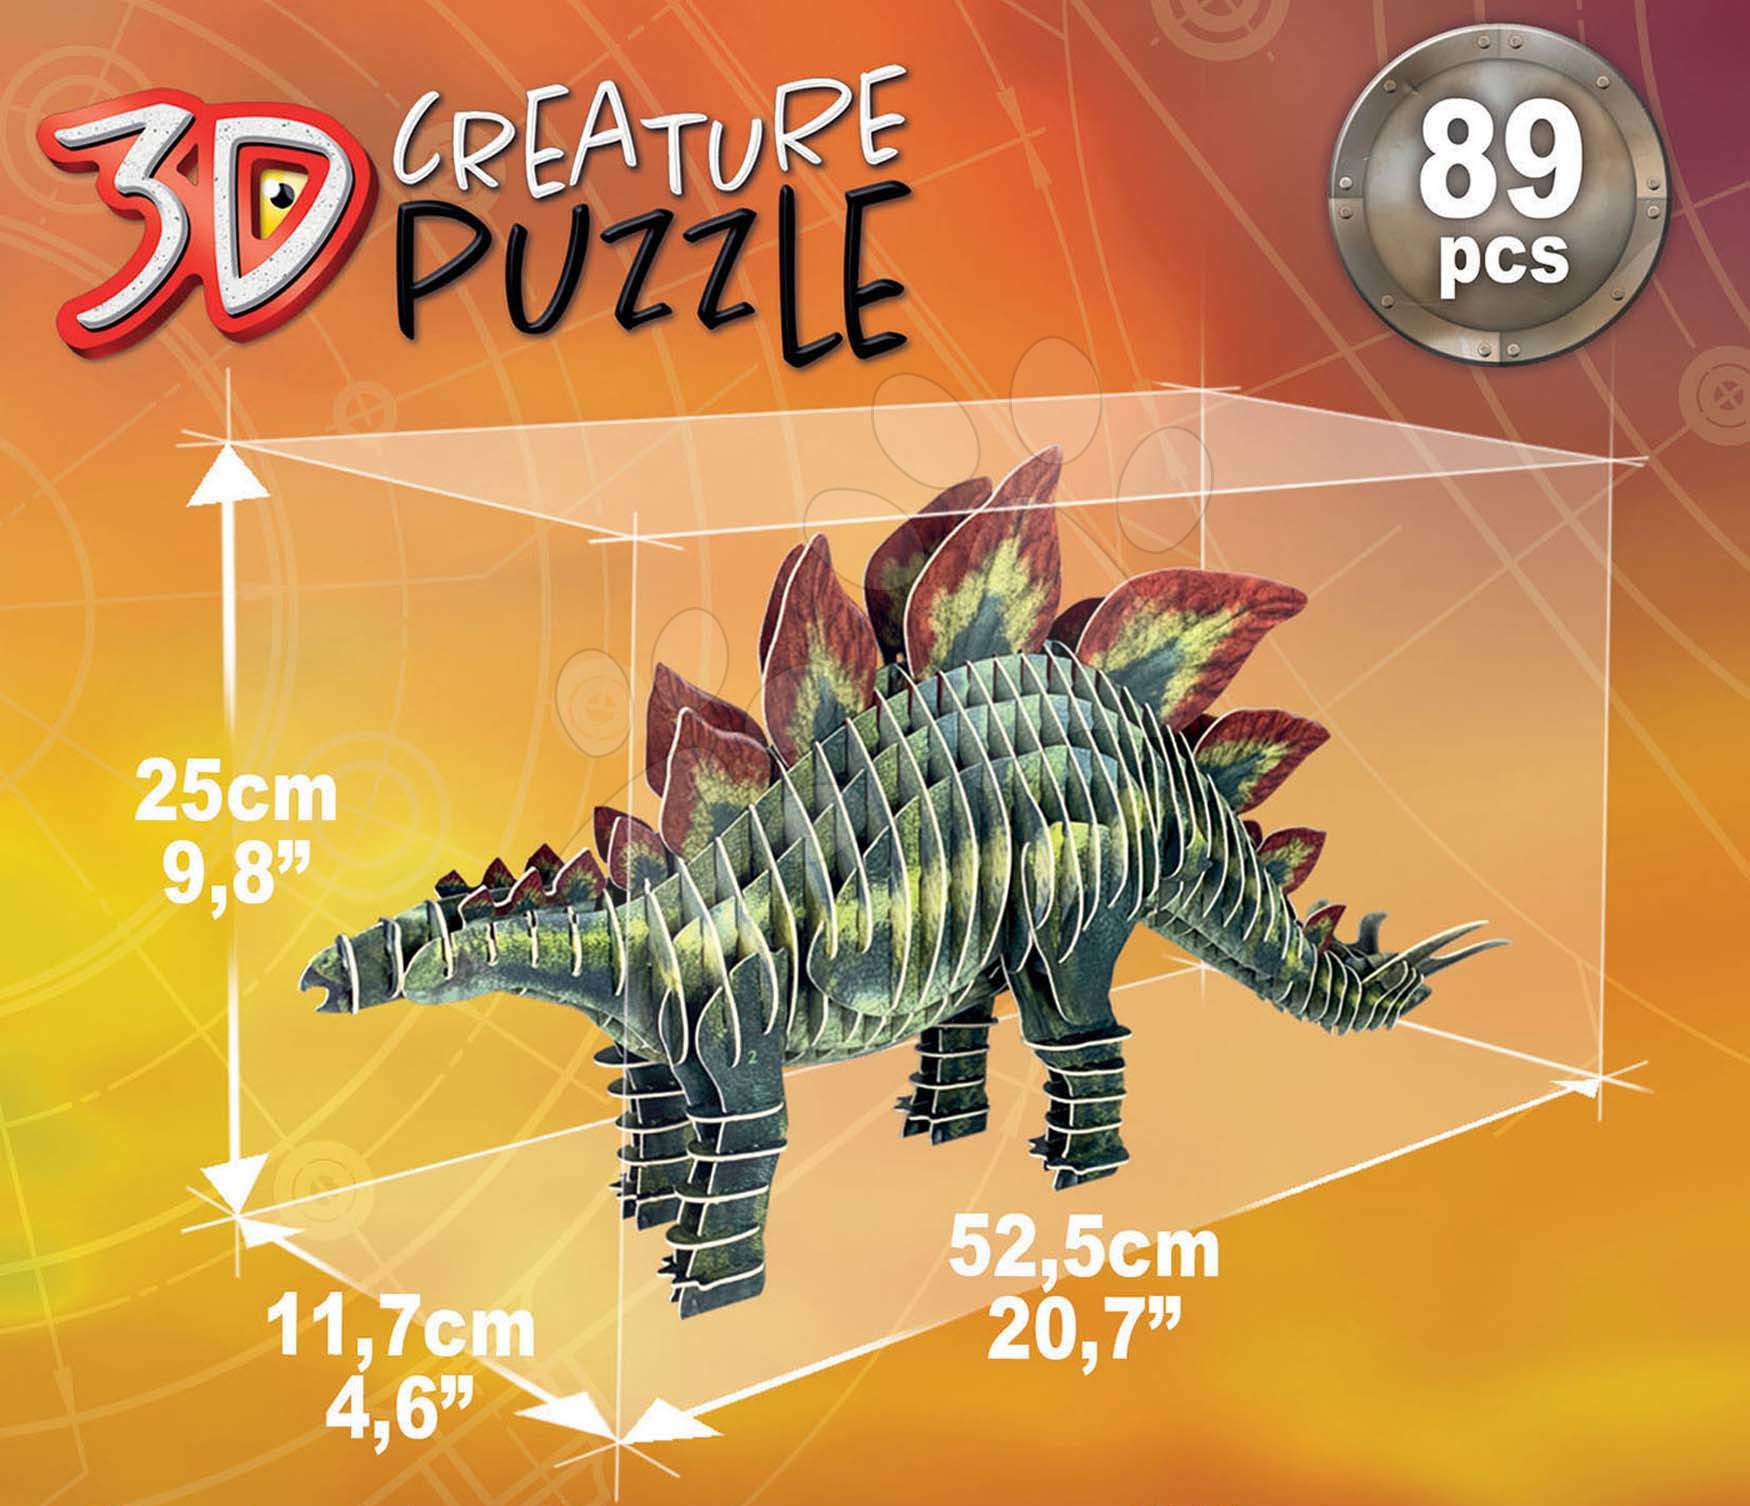 AR PopUp Puzzles – Dino – Brontosaurus Puzzle #2 (30 pieces) – AR products  ehf.